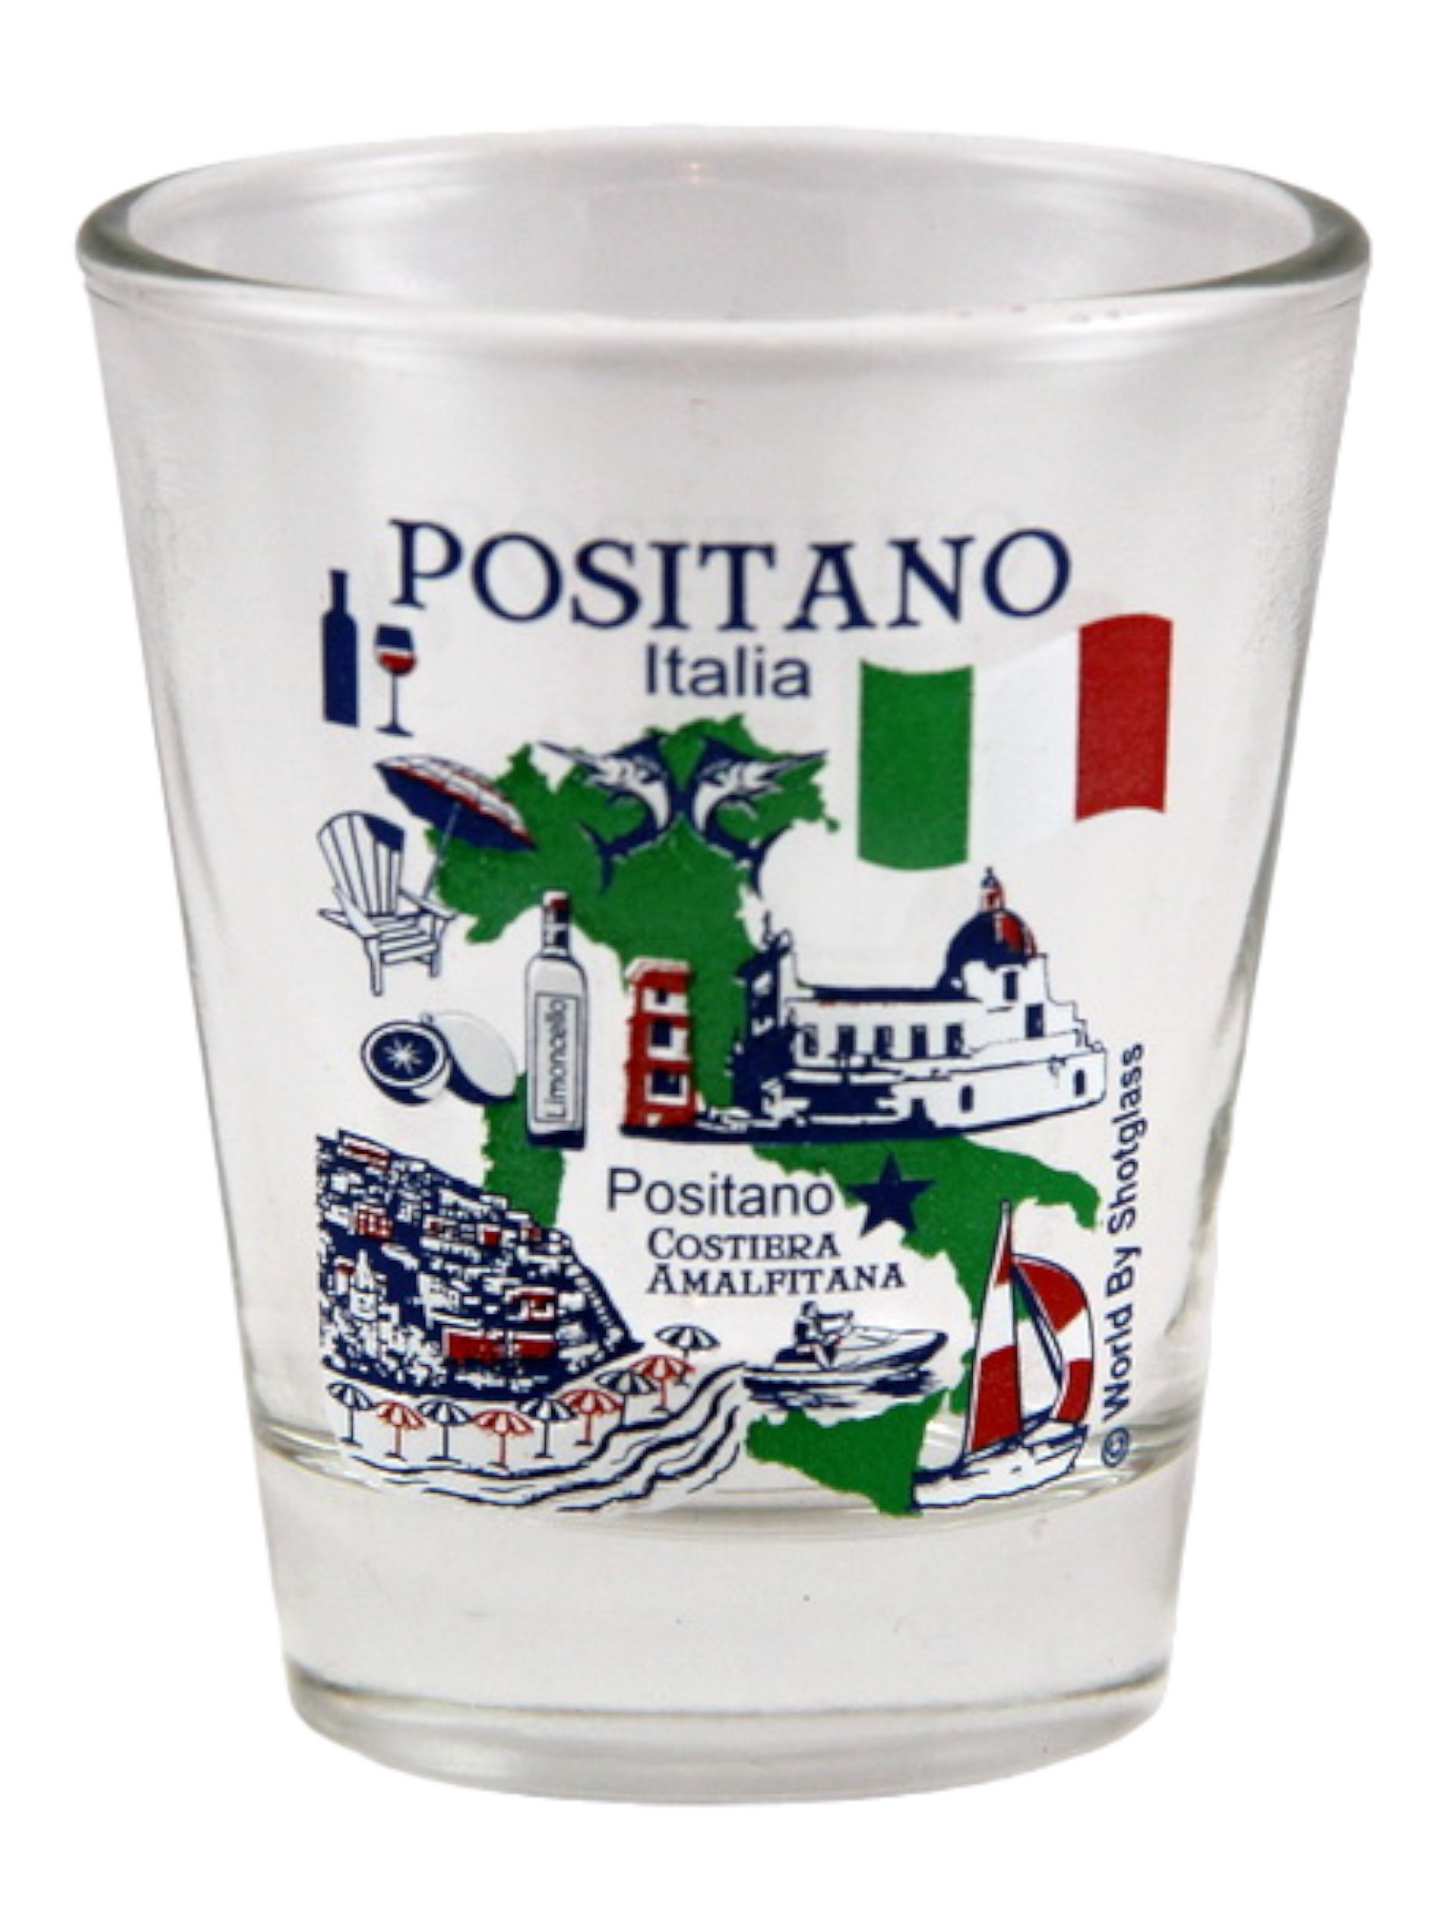 Positano Italy Amalfi Coast Great Italian Cities Collection Shot Glass